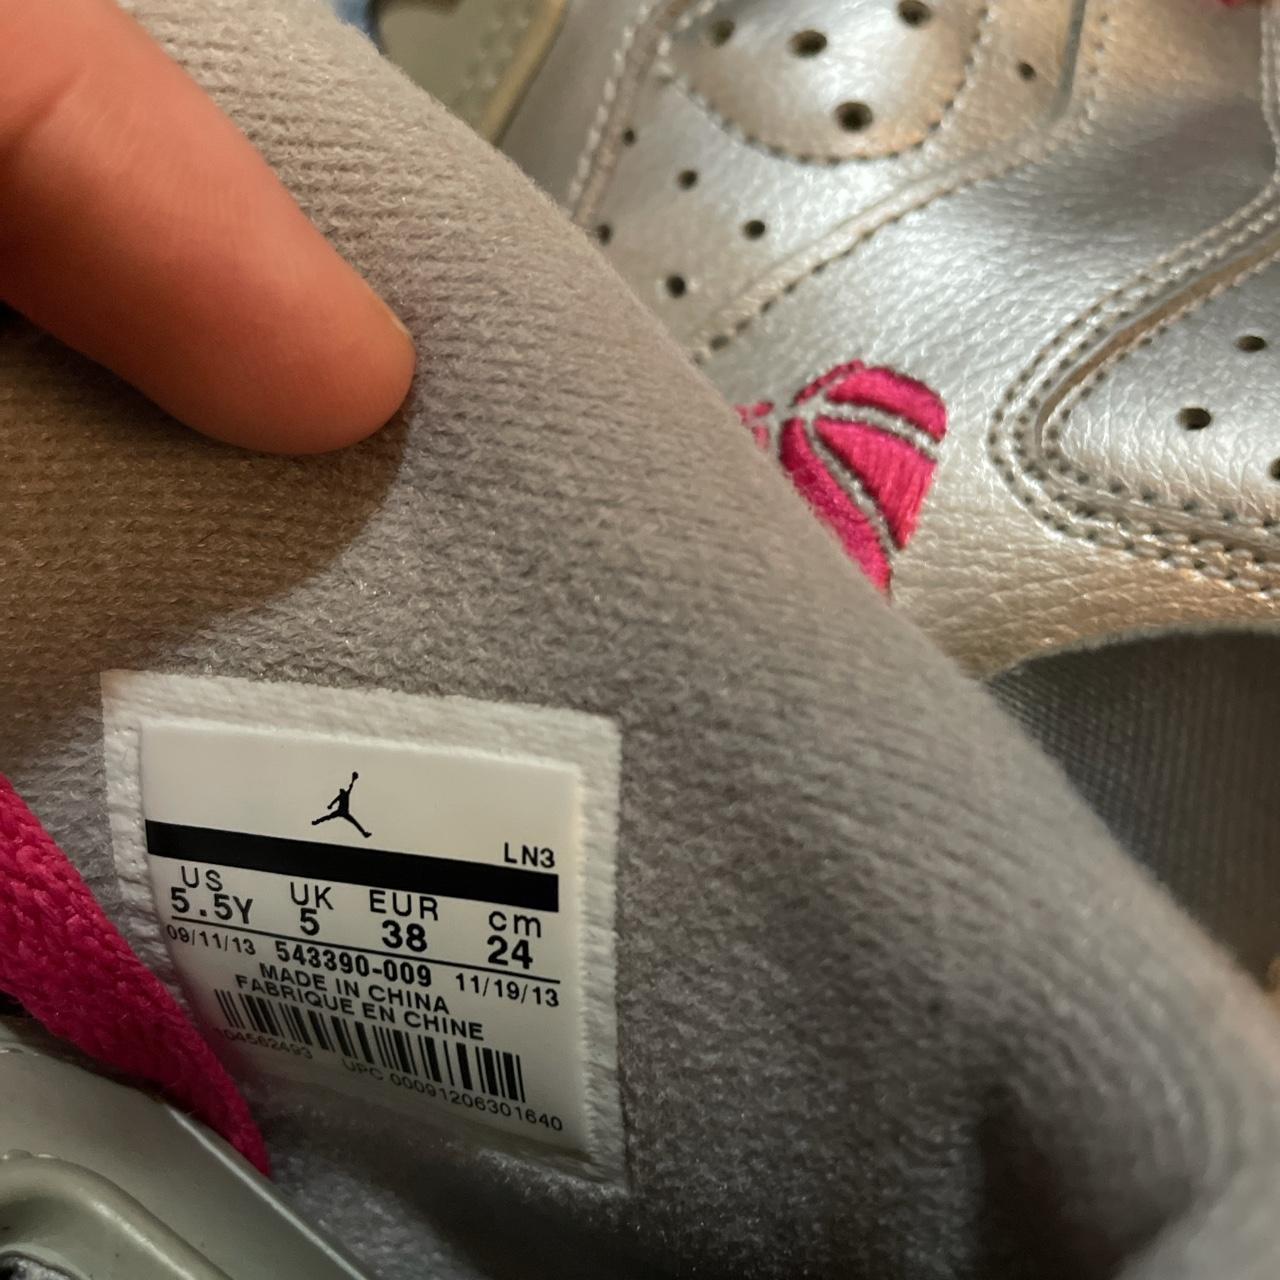 Product Image 4 - Jordan 6 “Valentines Day” Sneaker!

Size:5.5y
Release:11/19/13

#Jordan